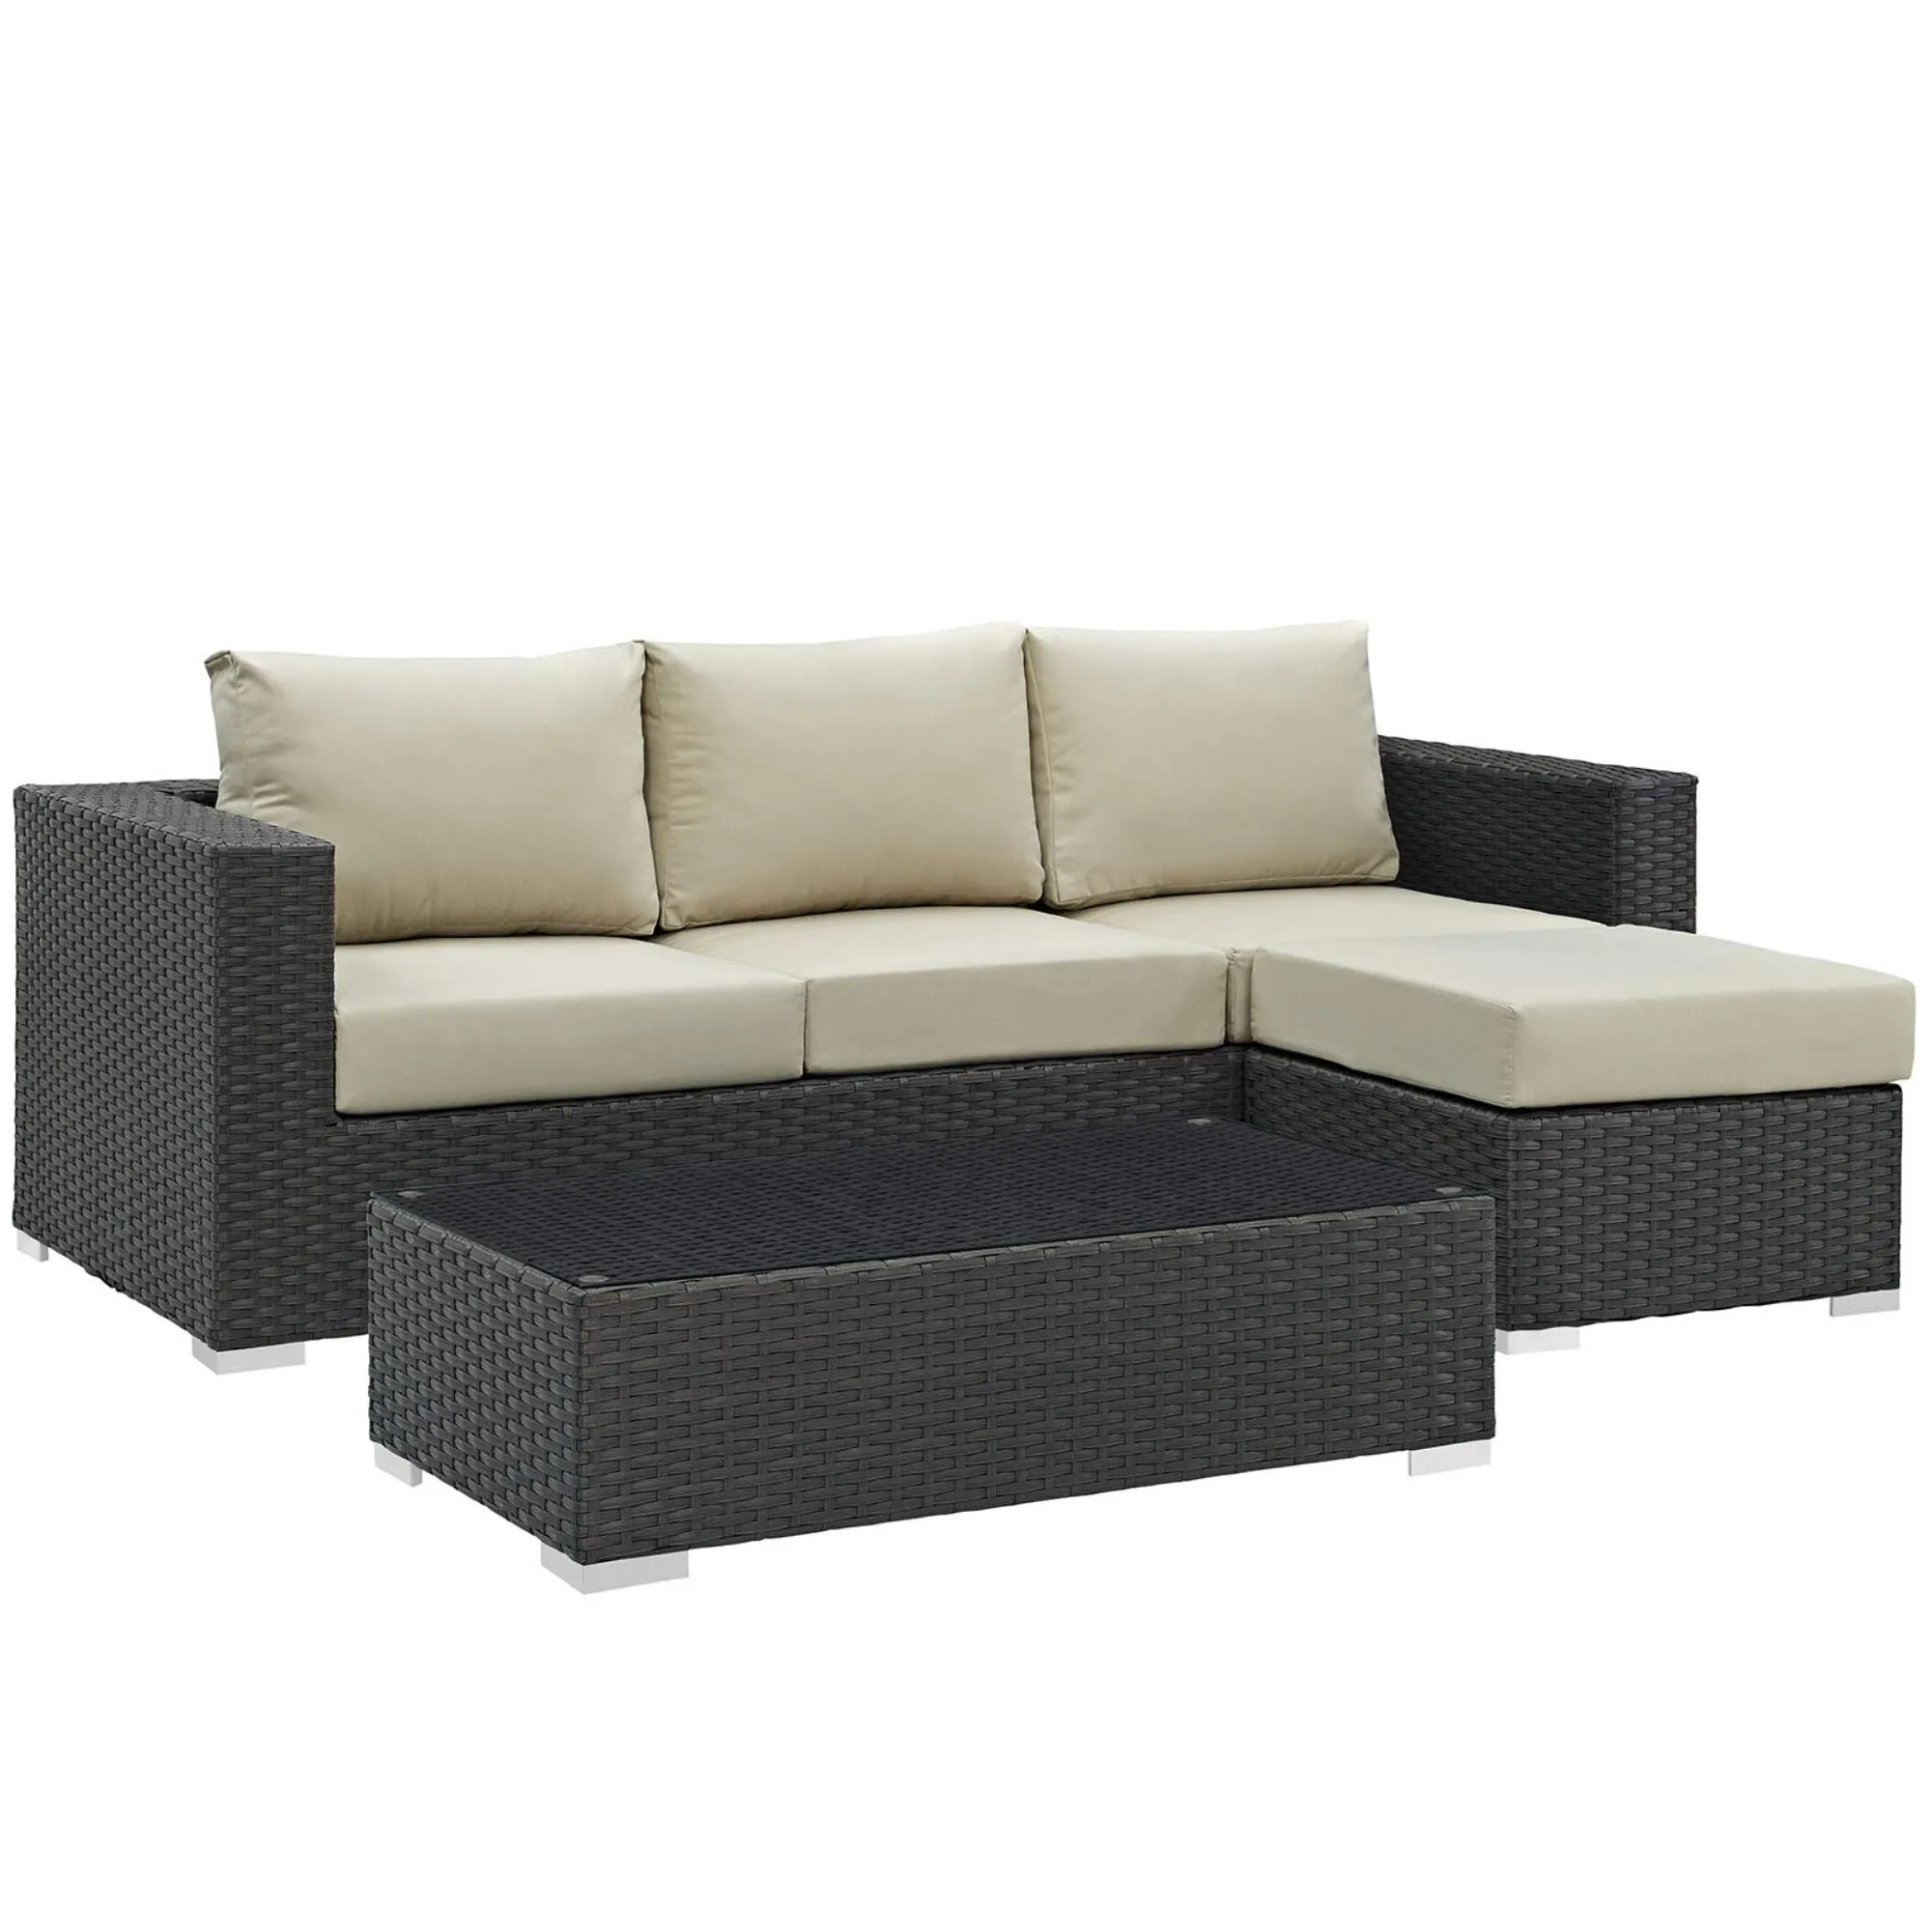 Sojourn Outdoor Patio Furniture Set - Sunbrella Cushions, Synthetic Rattan, UV Protection, Aluminum Frame - Includes Coffee Table, Ottoman, Sofa